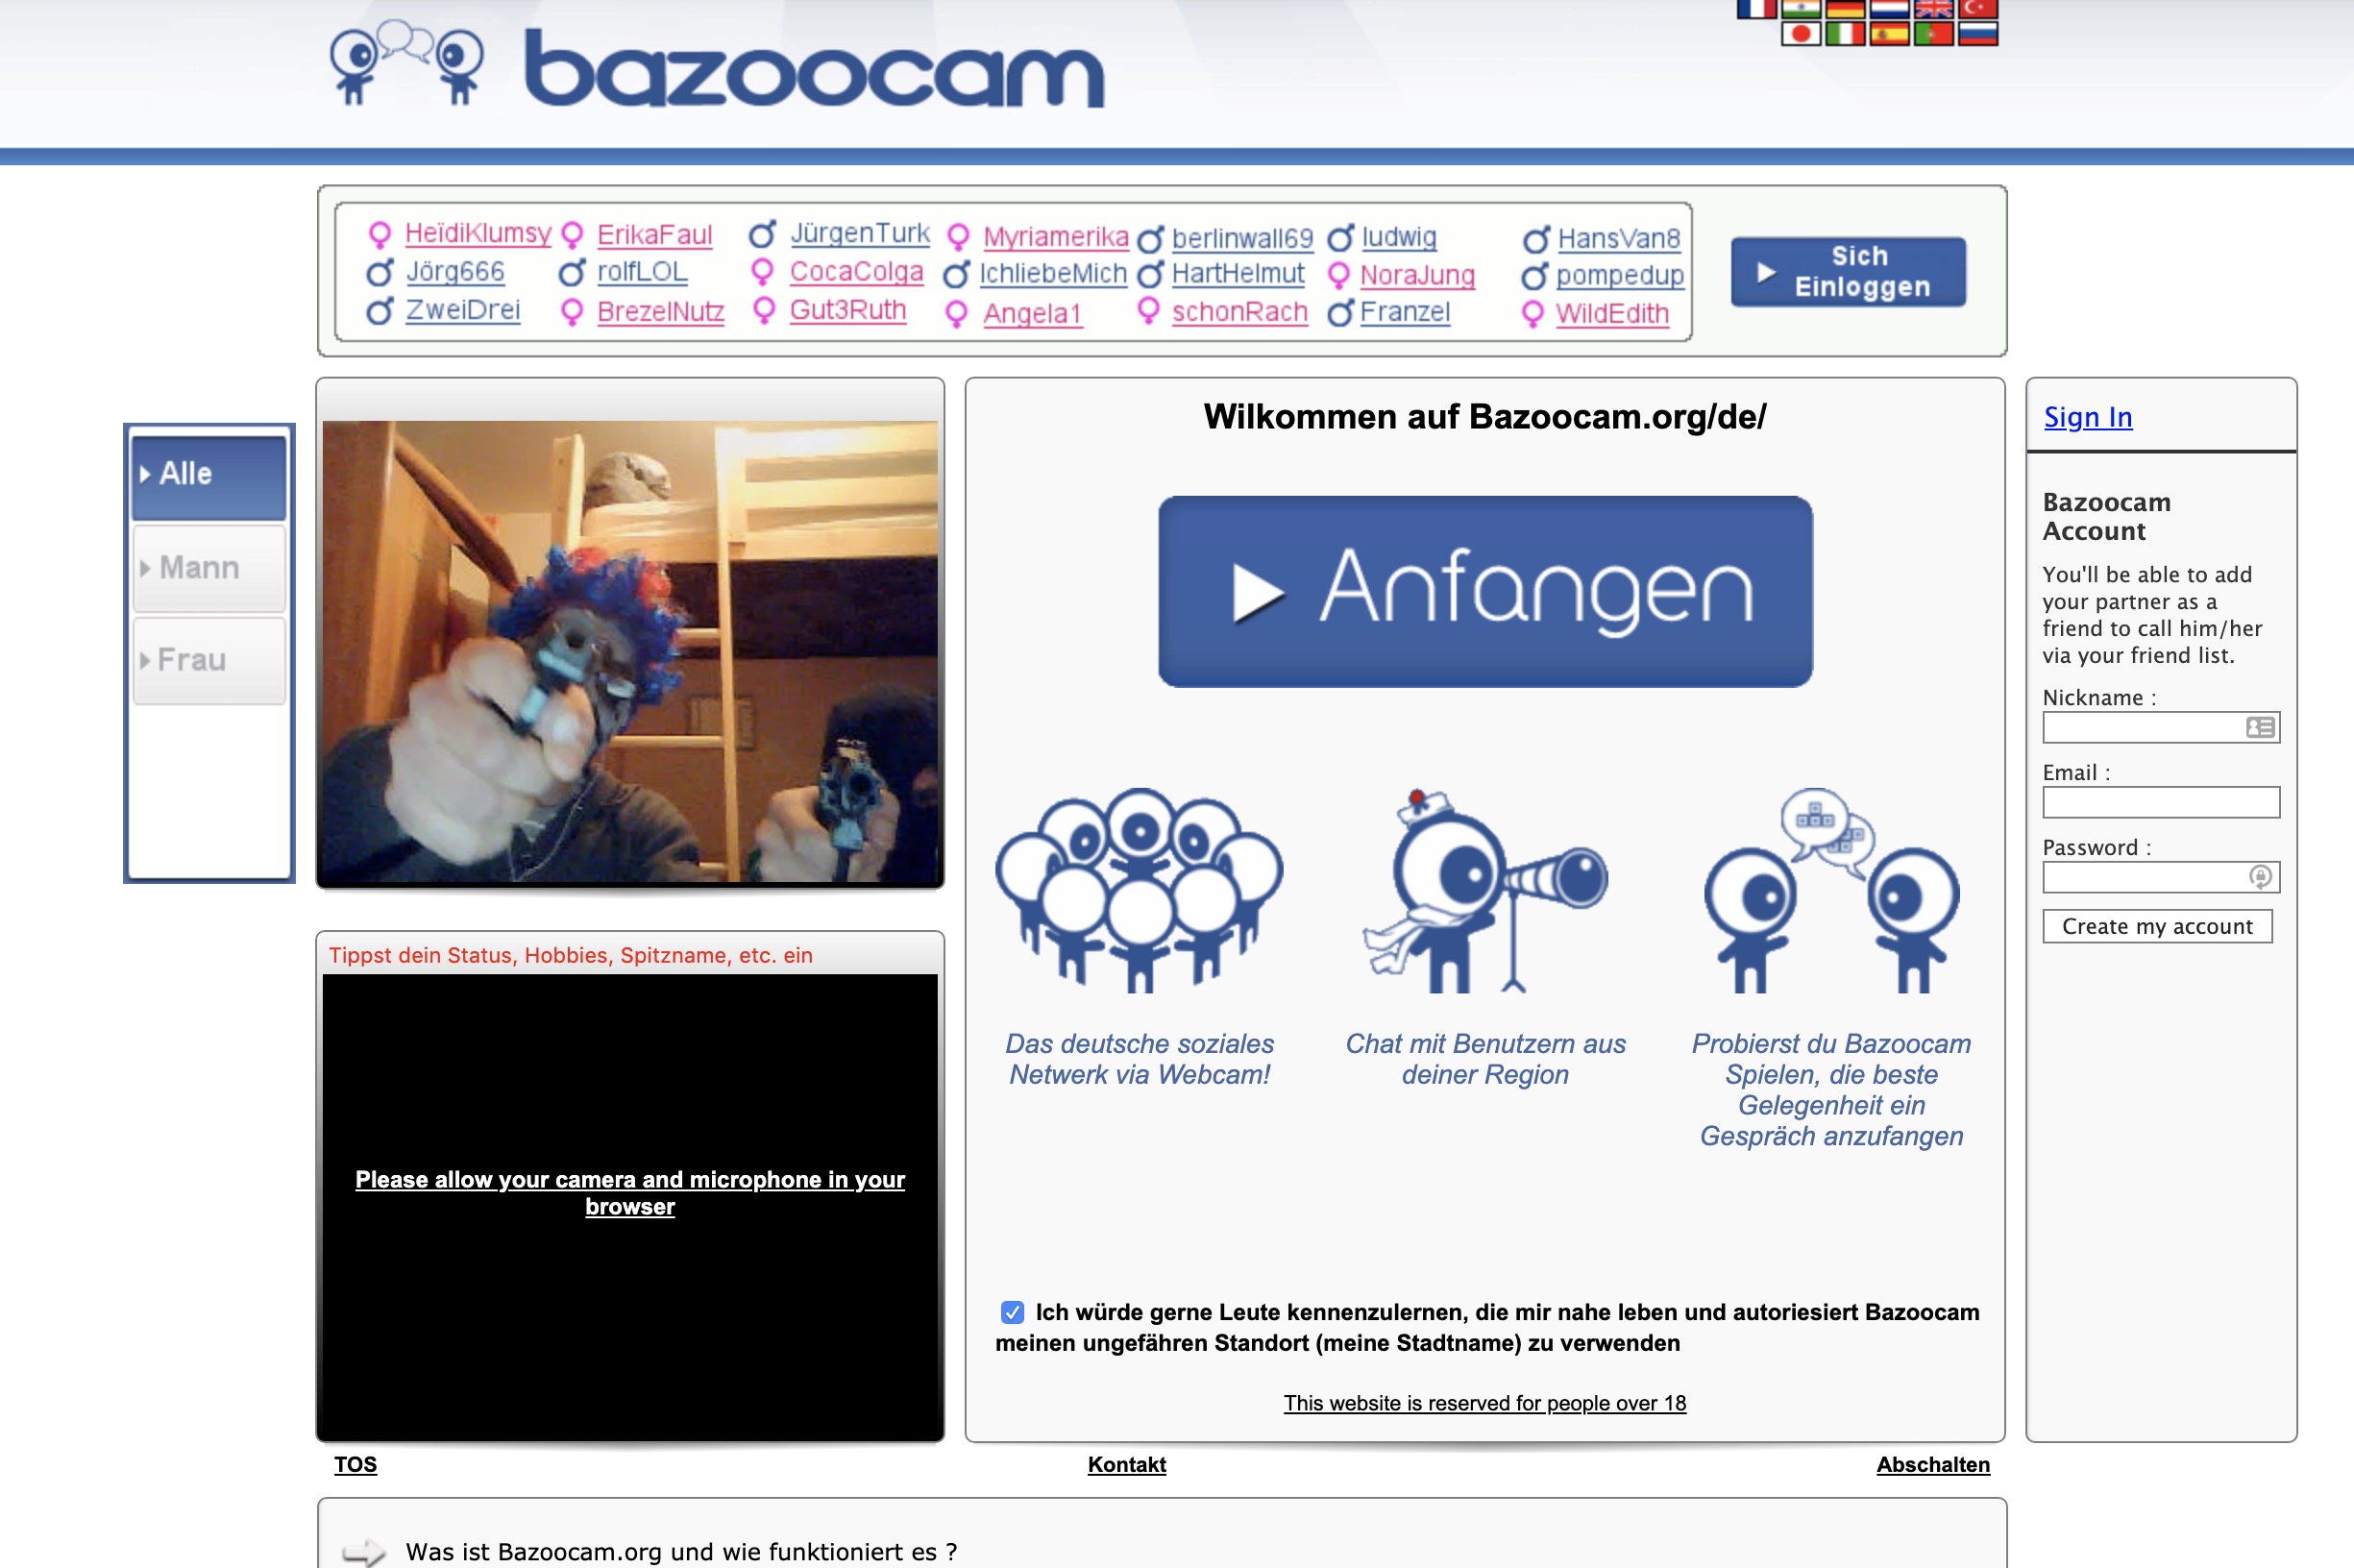 Sites like bazoocam